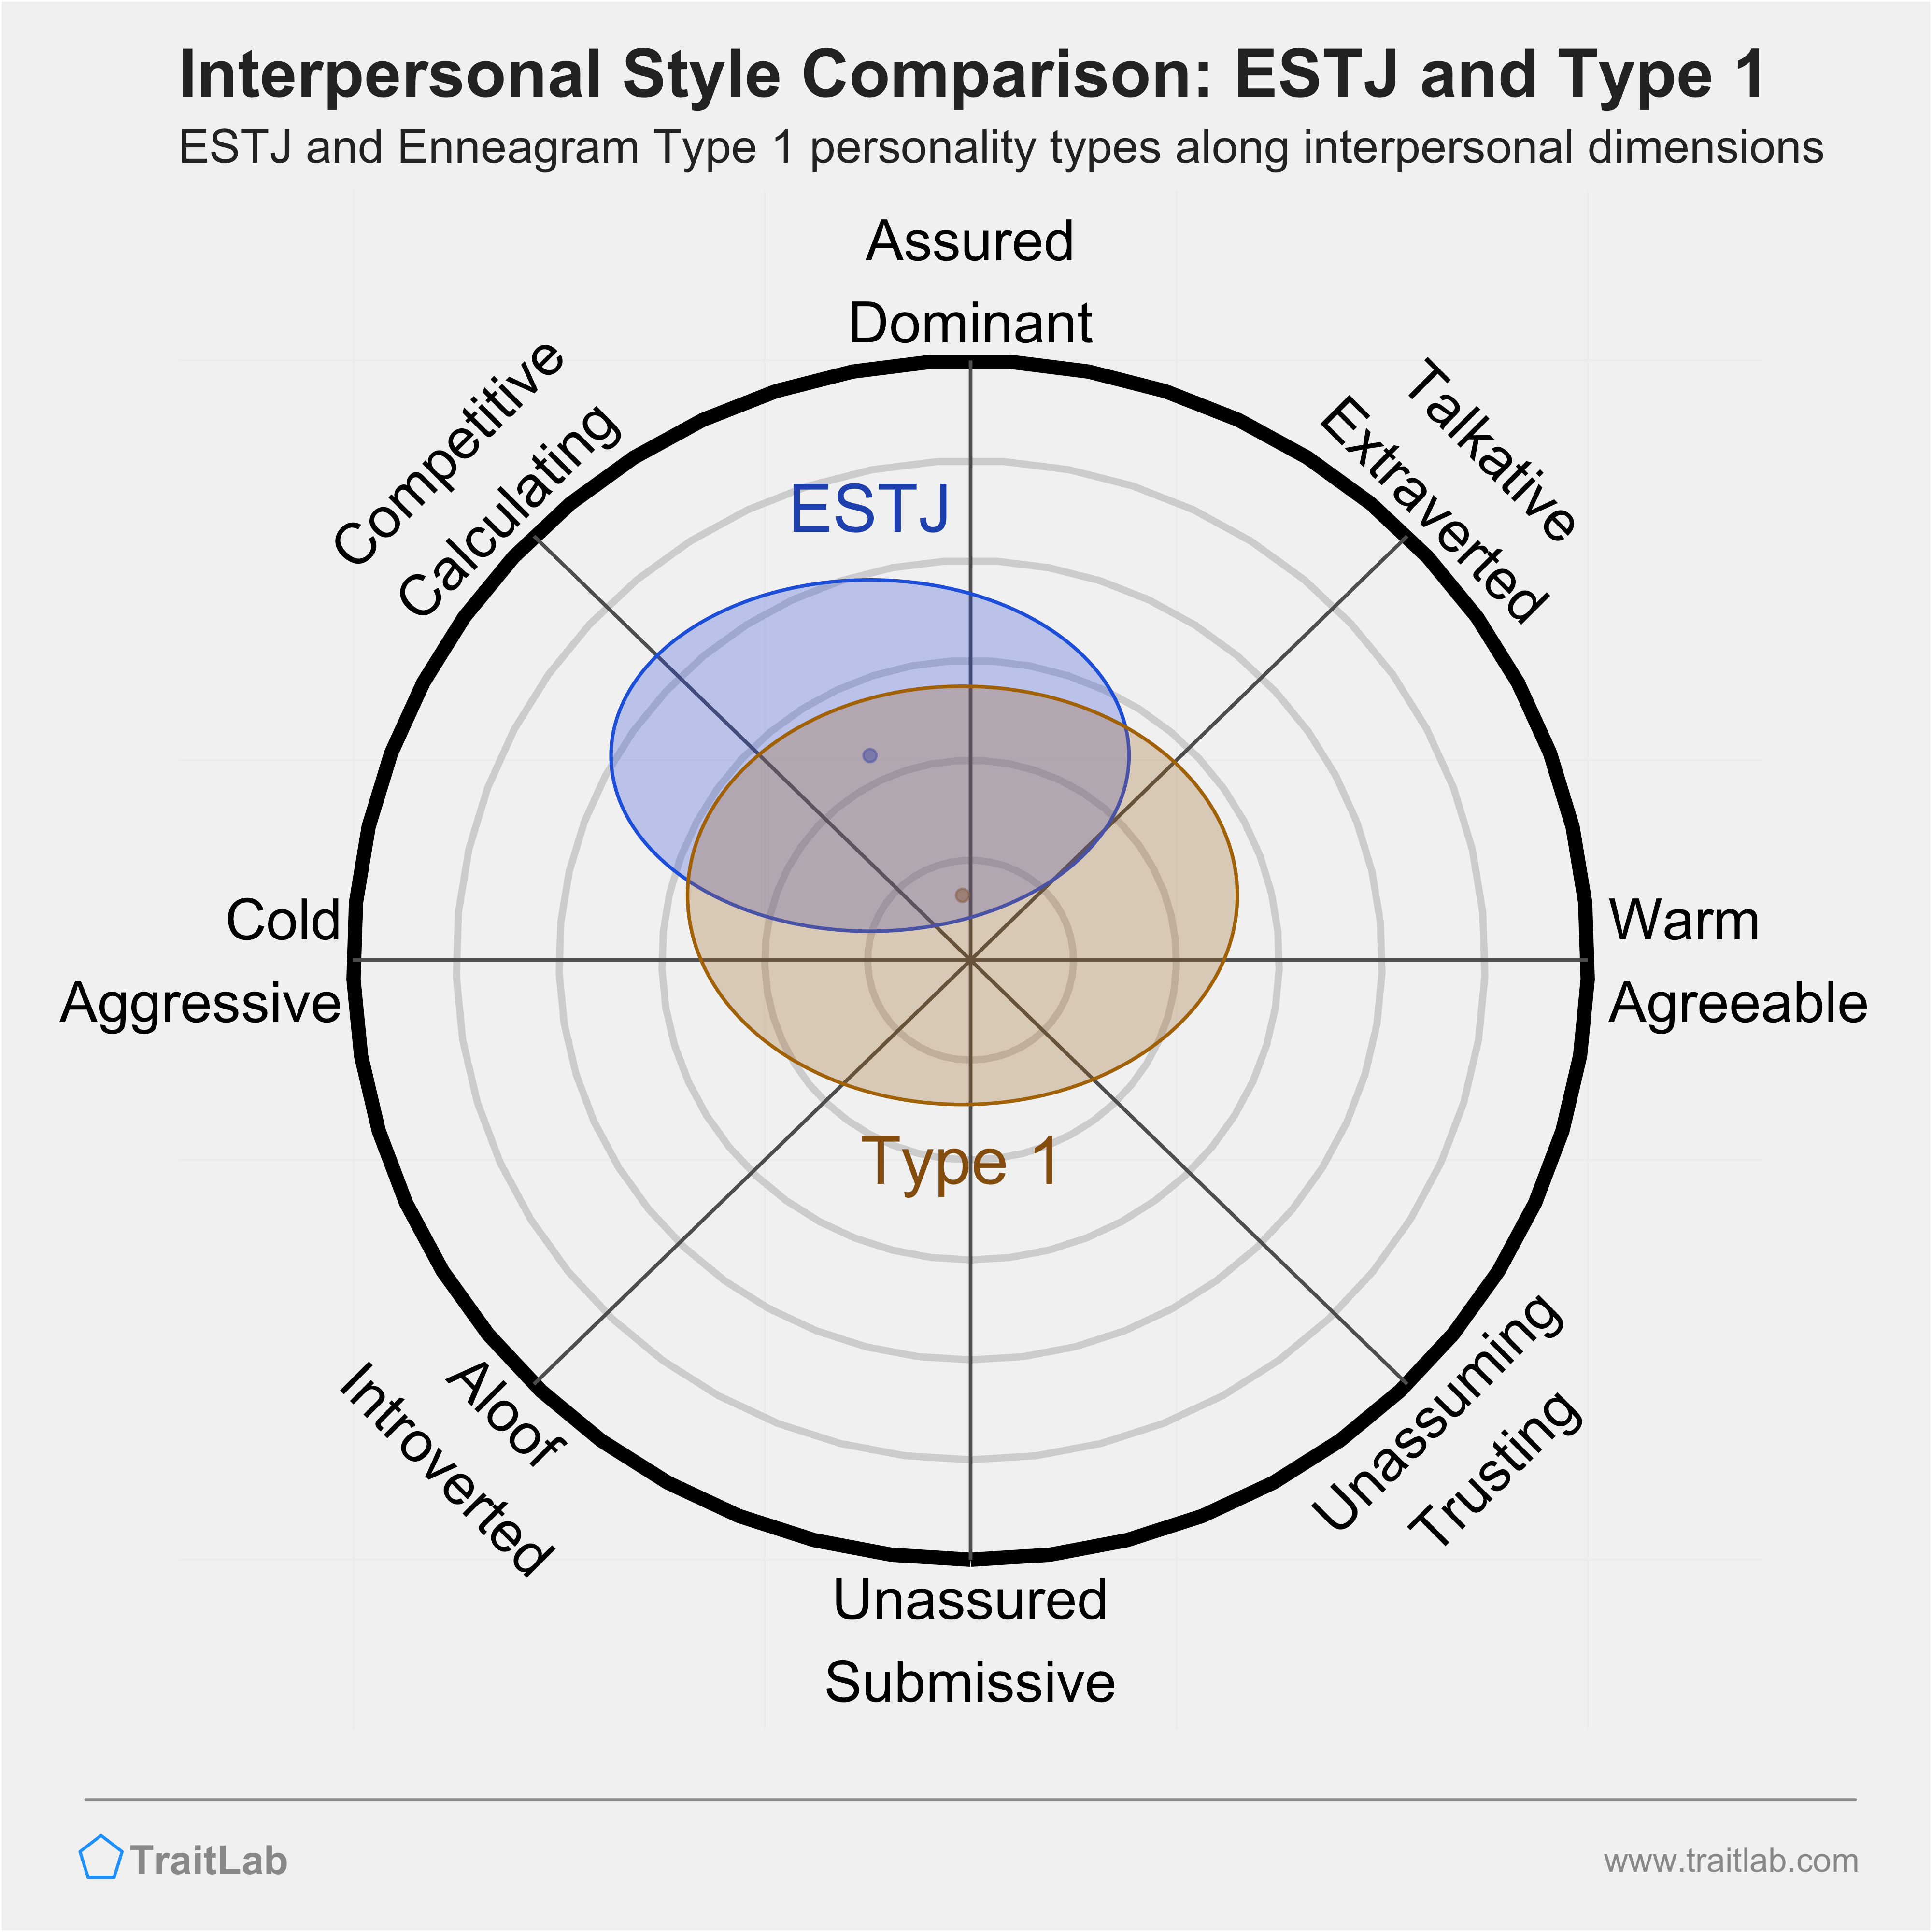 Enneagram ESTJ and Type 1 comparison across interpersonal dimensions